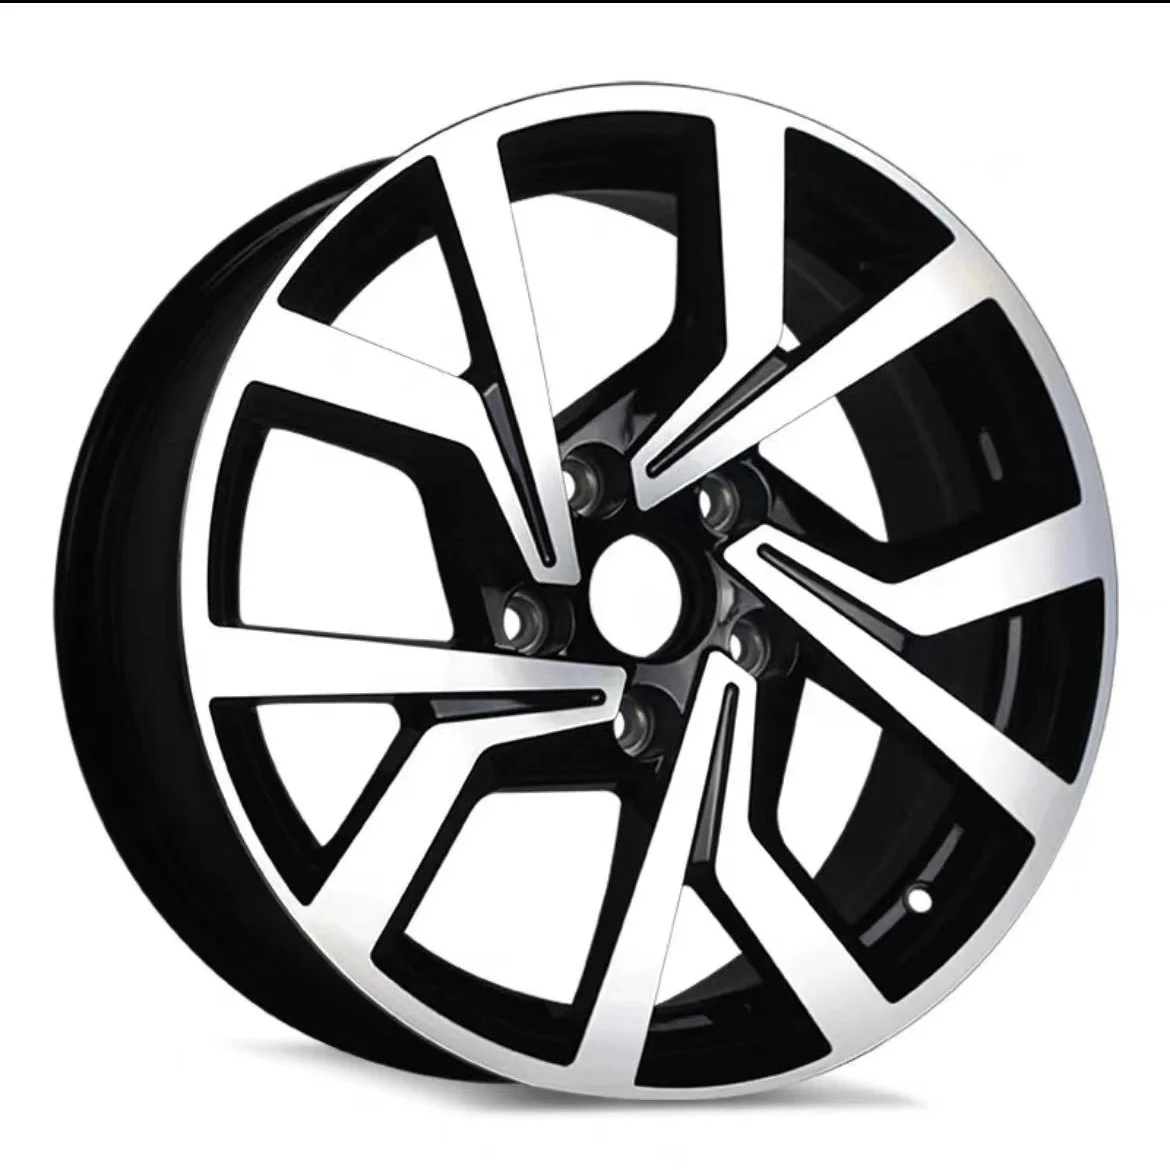 

Top sale 17 18 19 20 inch rims 5 holes 100/112 5X112 Sport Alloy Car Wheels For VW GTI Golf Car Wheels